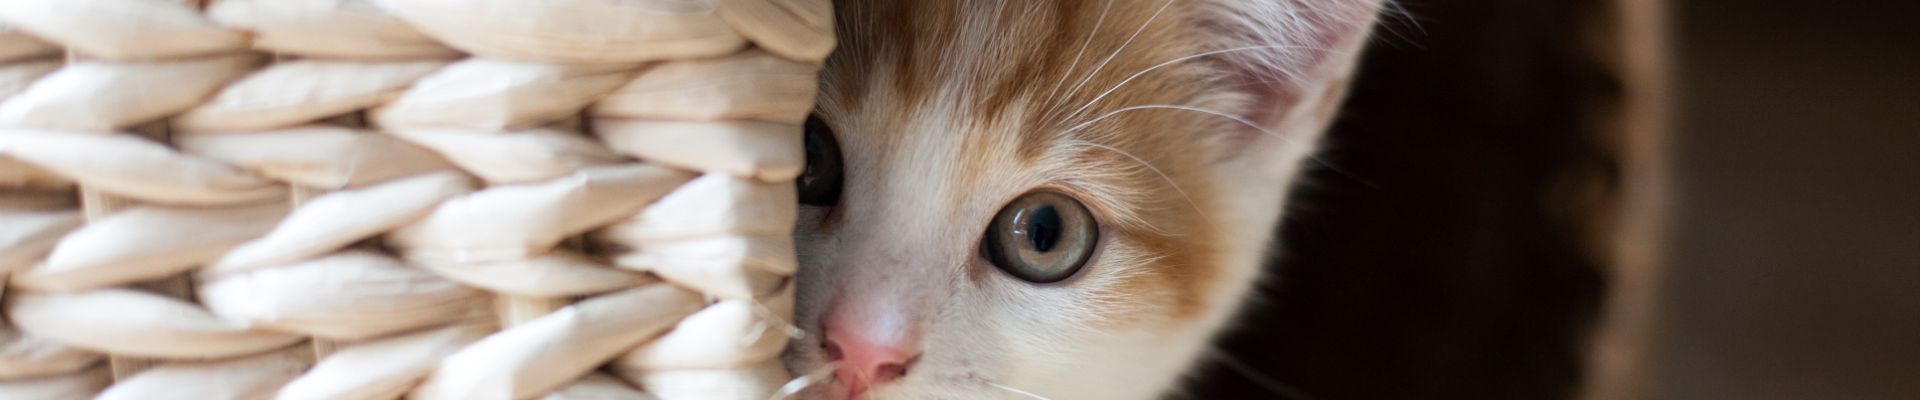 scared orange kitten hides basket